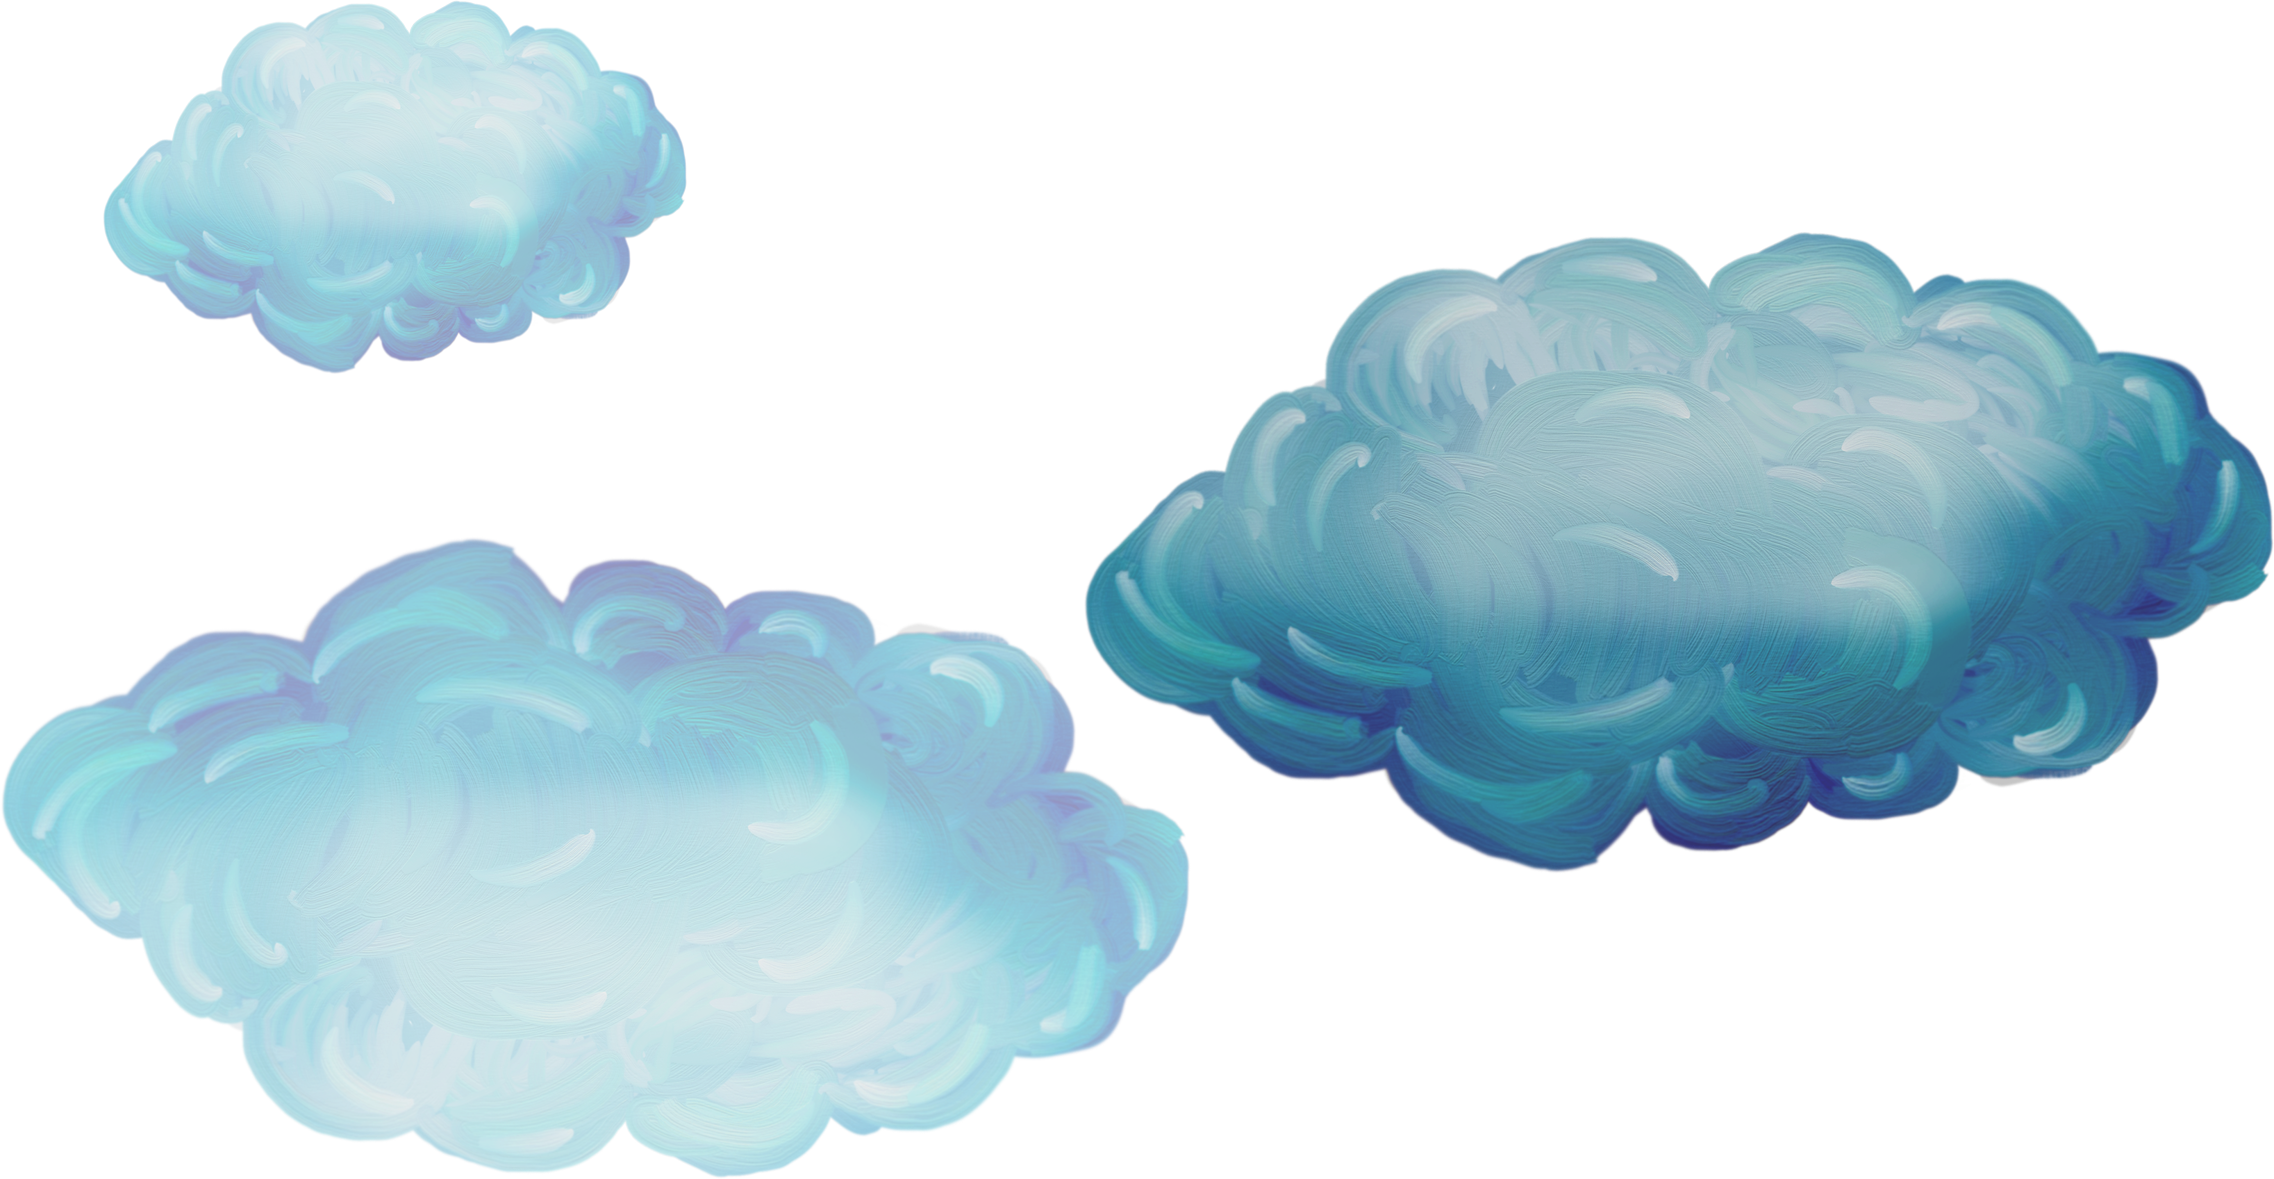 Картинка облако для детей на прозрачном фоне